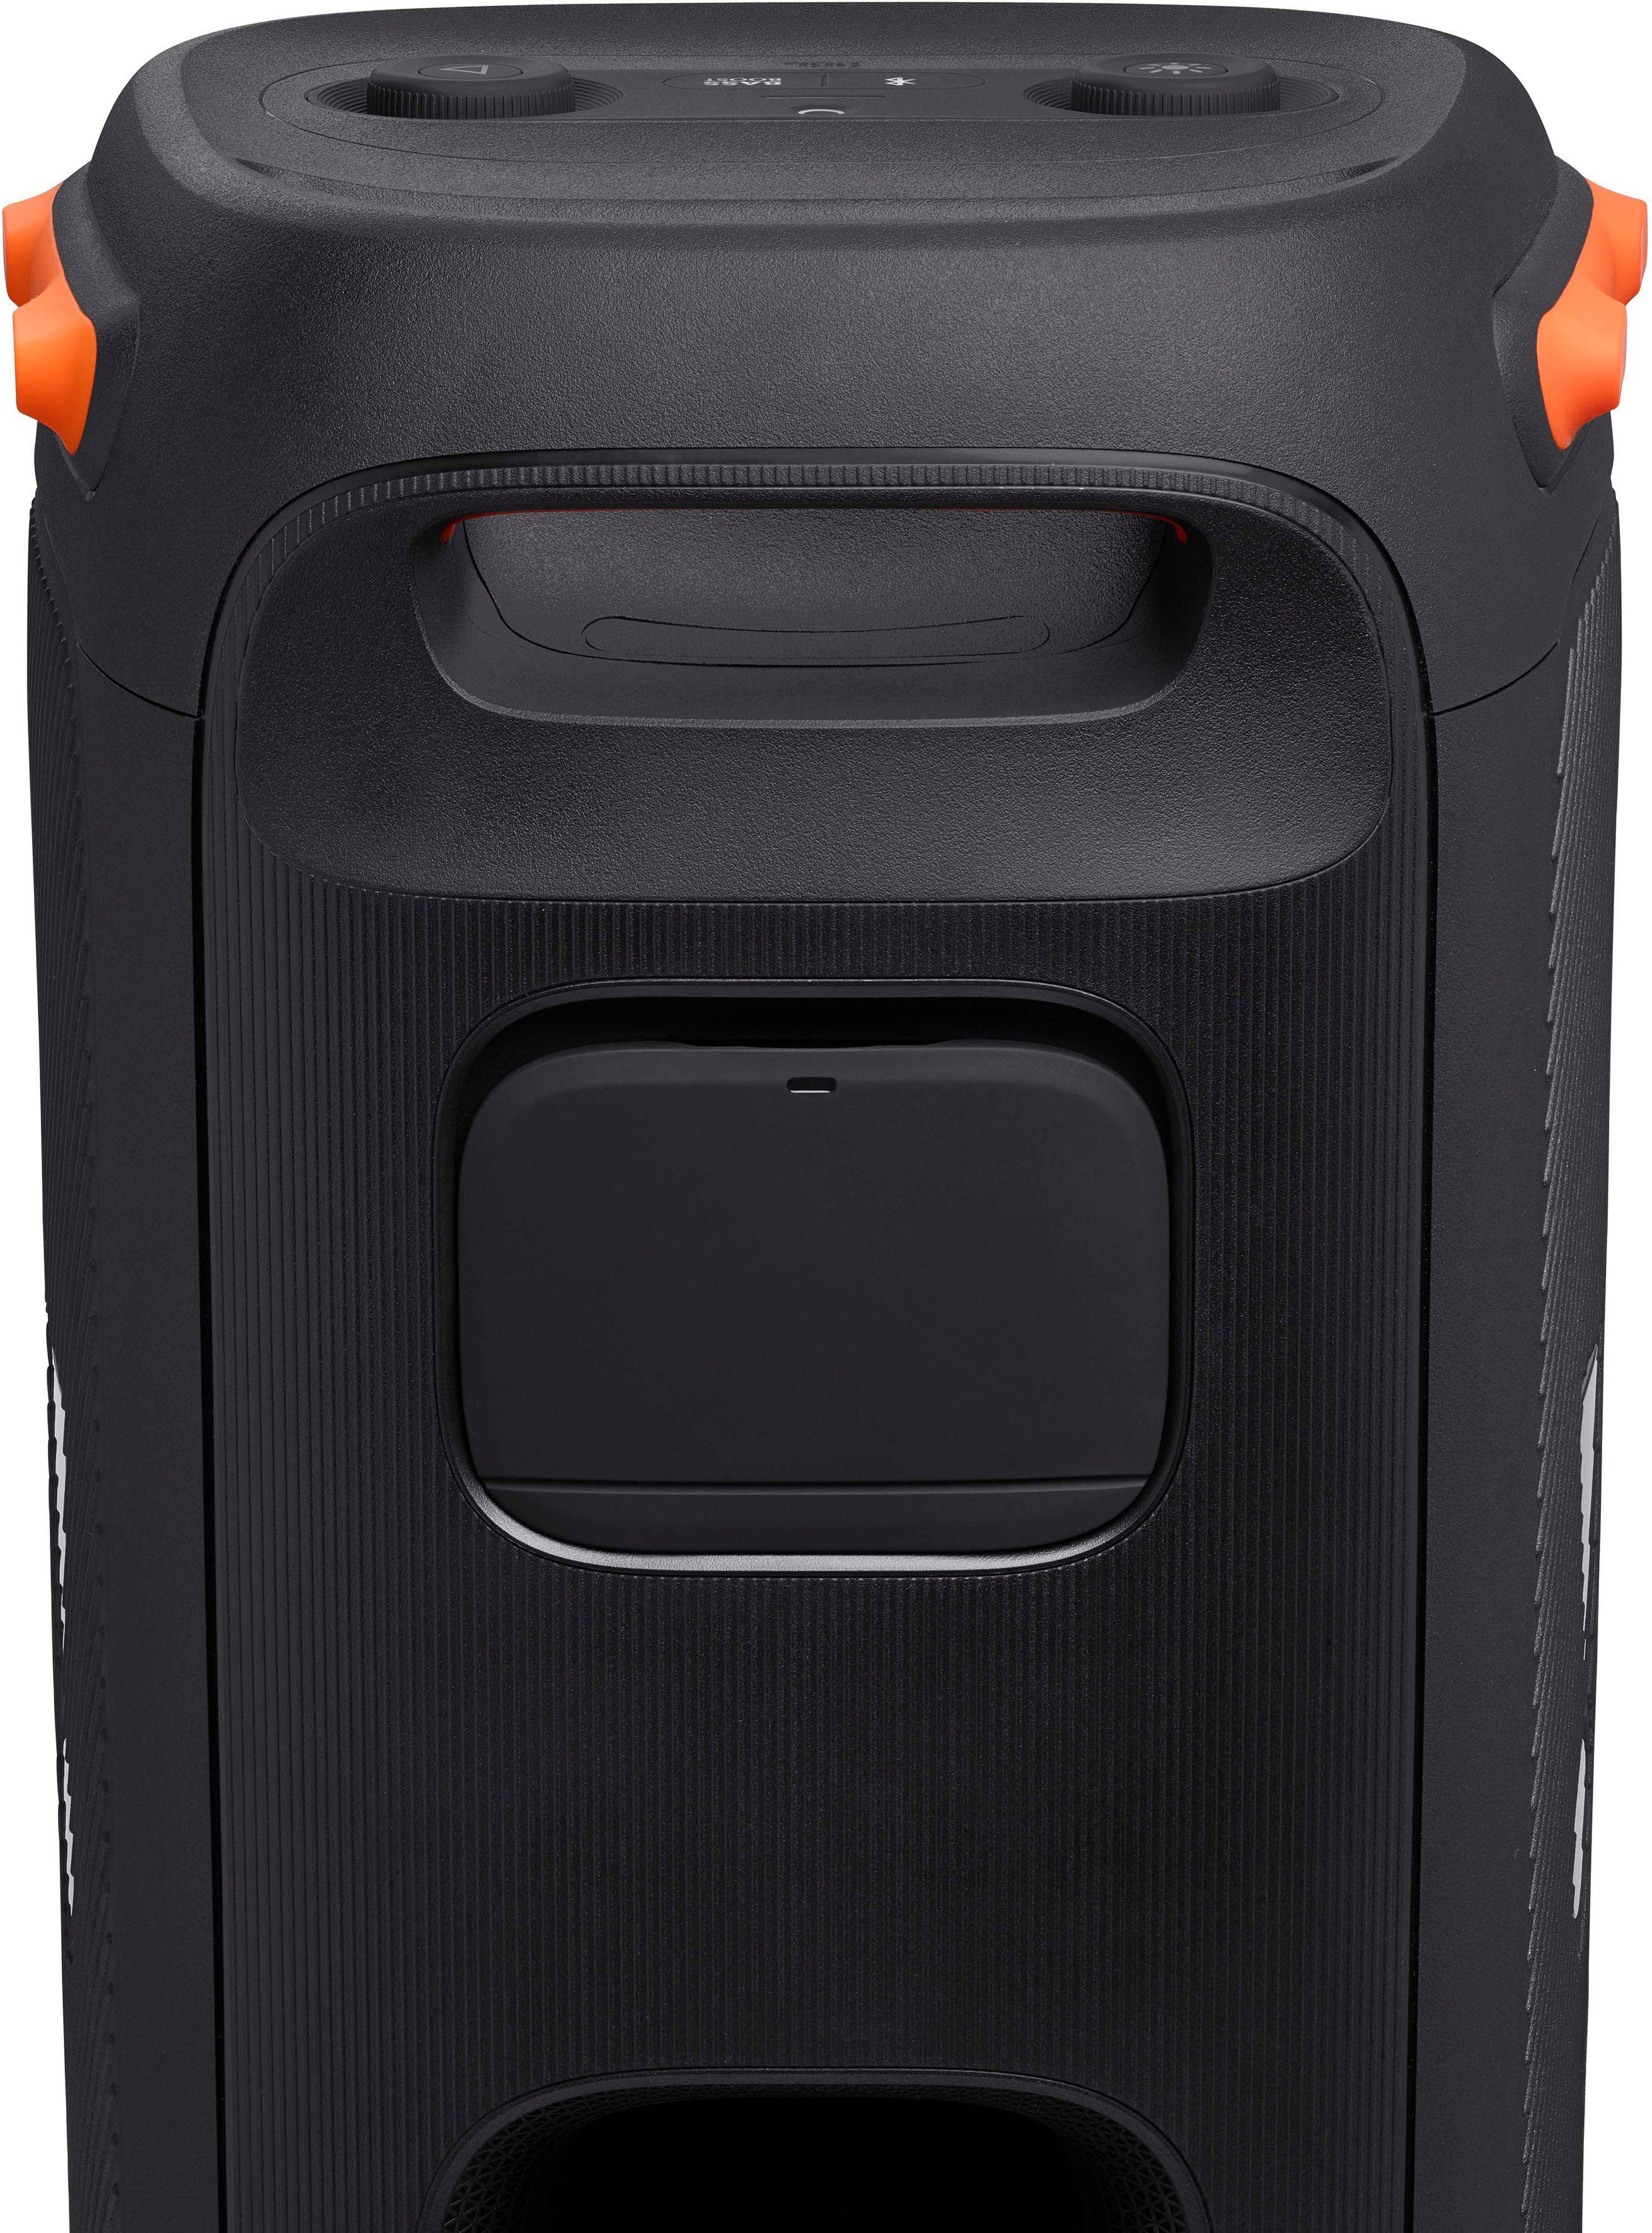 110 Partybox JBL Portable-Lautsprecher W) (160